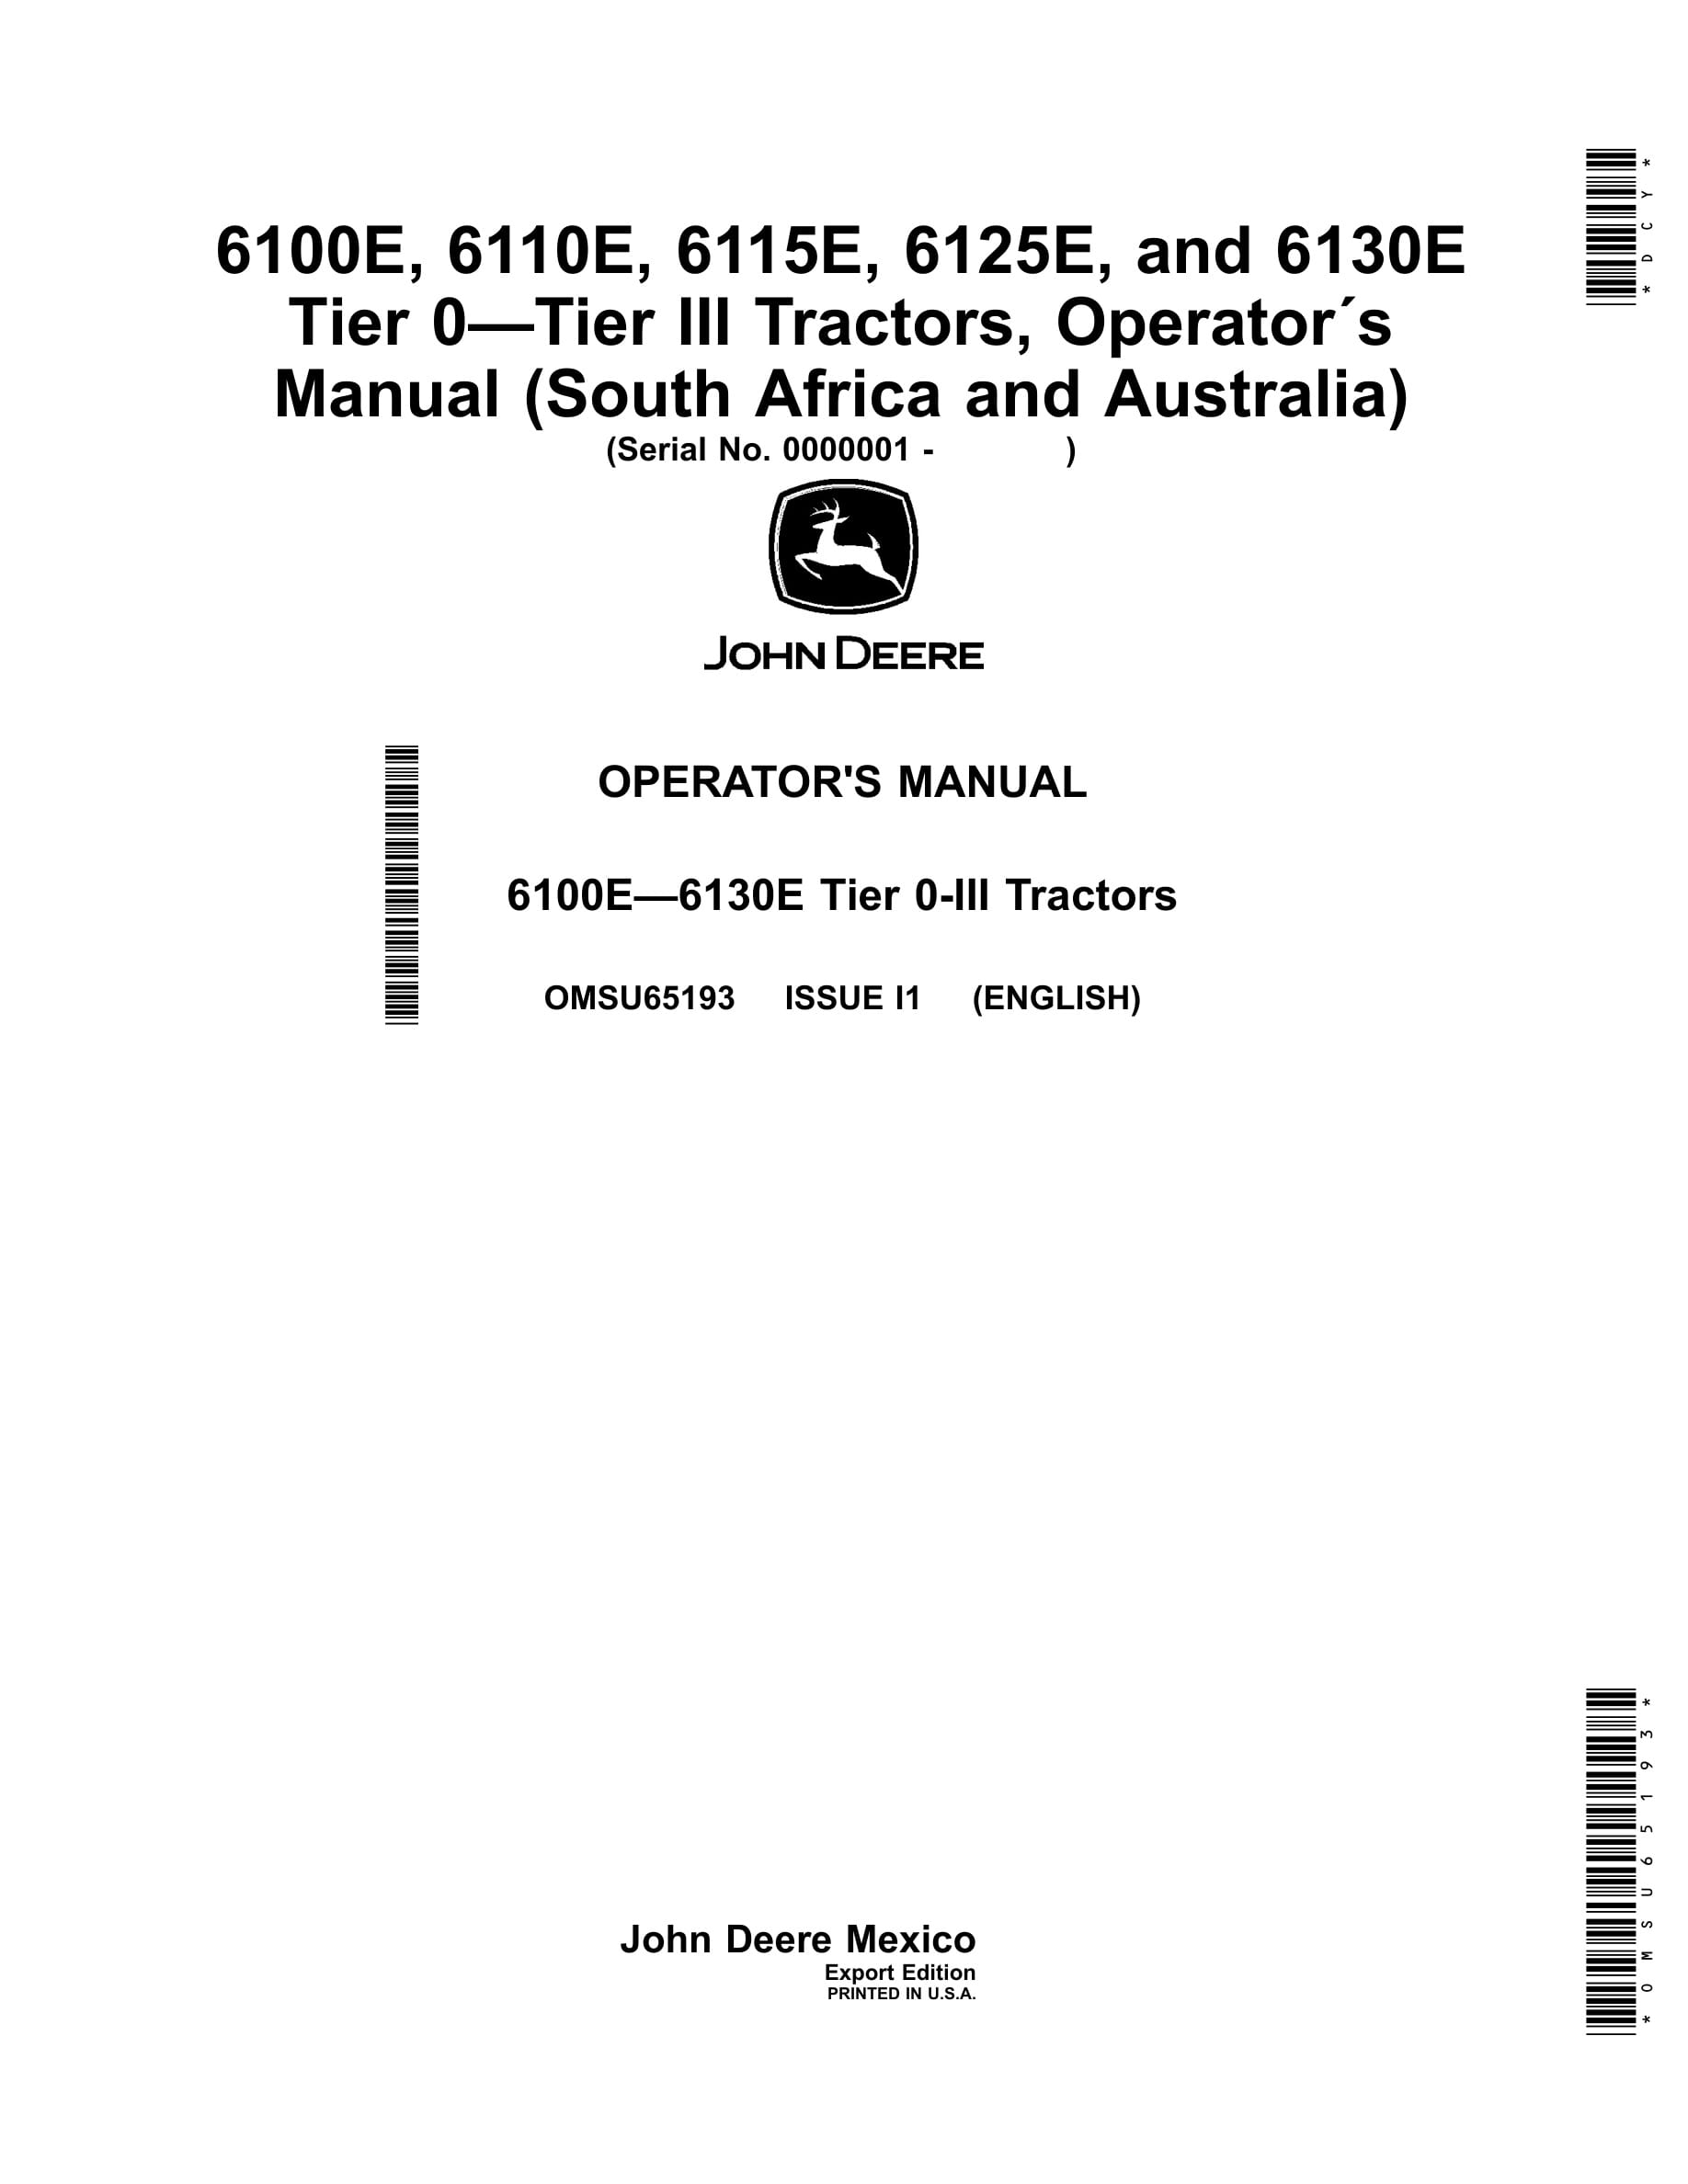 John Deere 6100e, 6110e, 6115e, 6125e, And 6130e Tier 0-tier Iii Tractors Operator Manuals OMSU65193-1